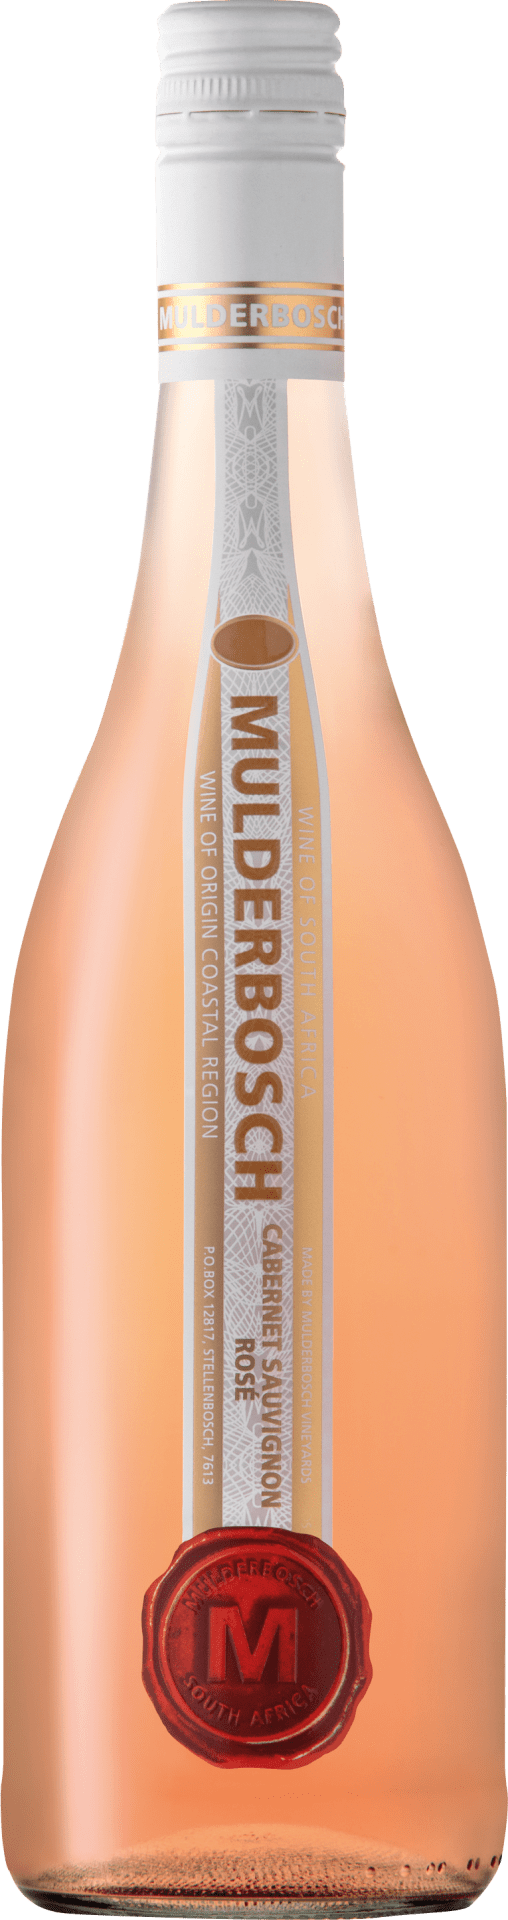 Mulderbosch Cabernet Sauvignon Rosé